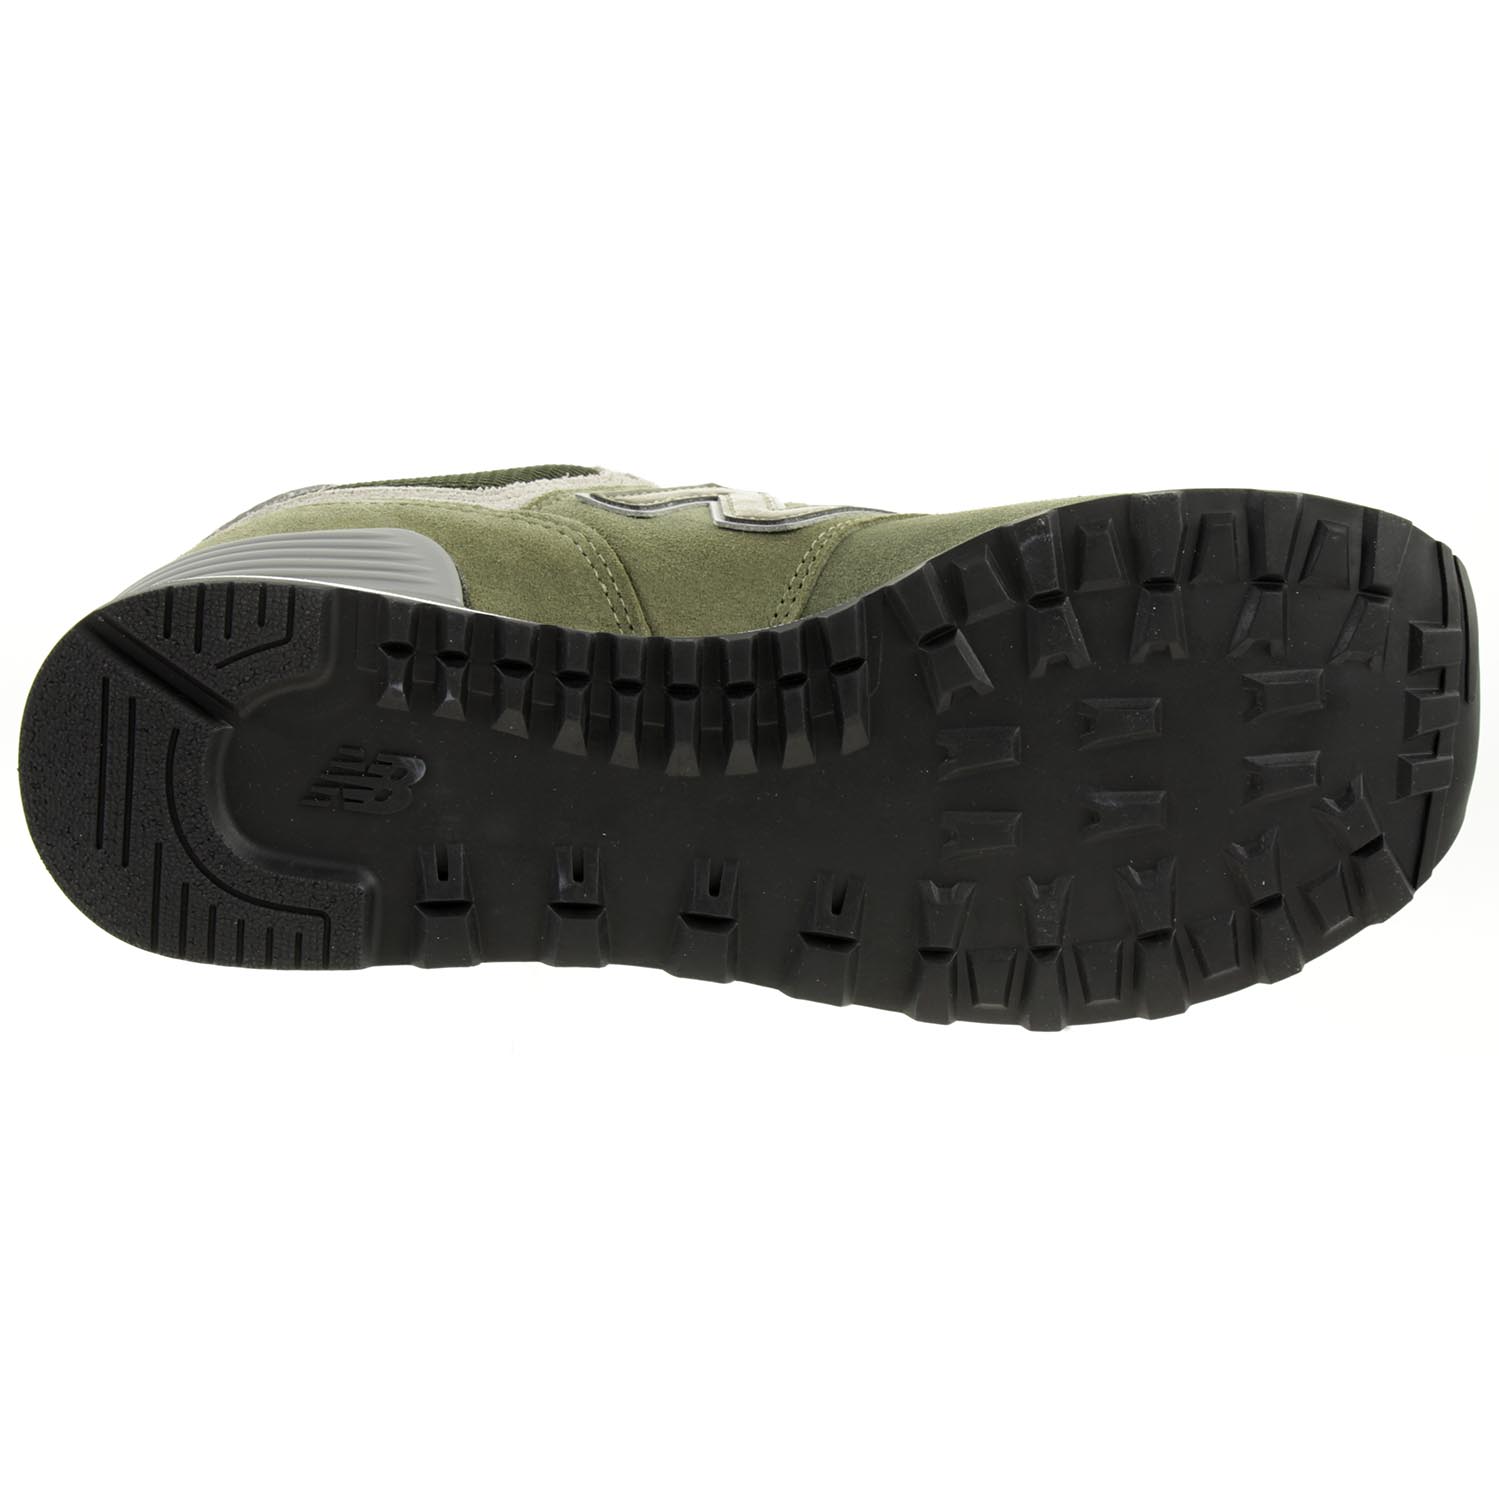 New Balance ML 574 EGO Classic Sneaker Herren Schuhe grün